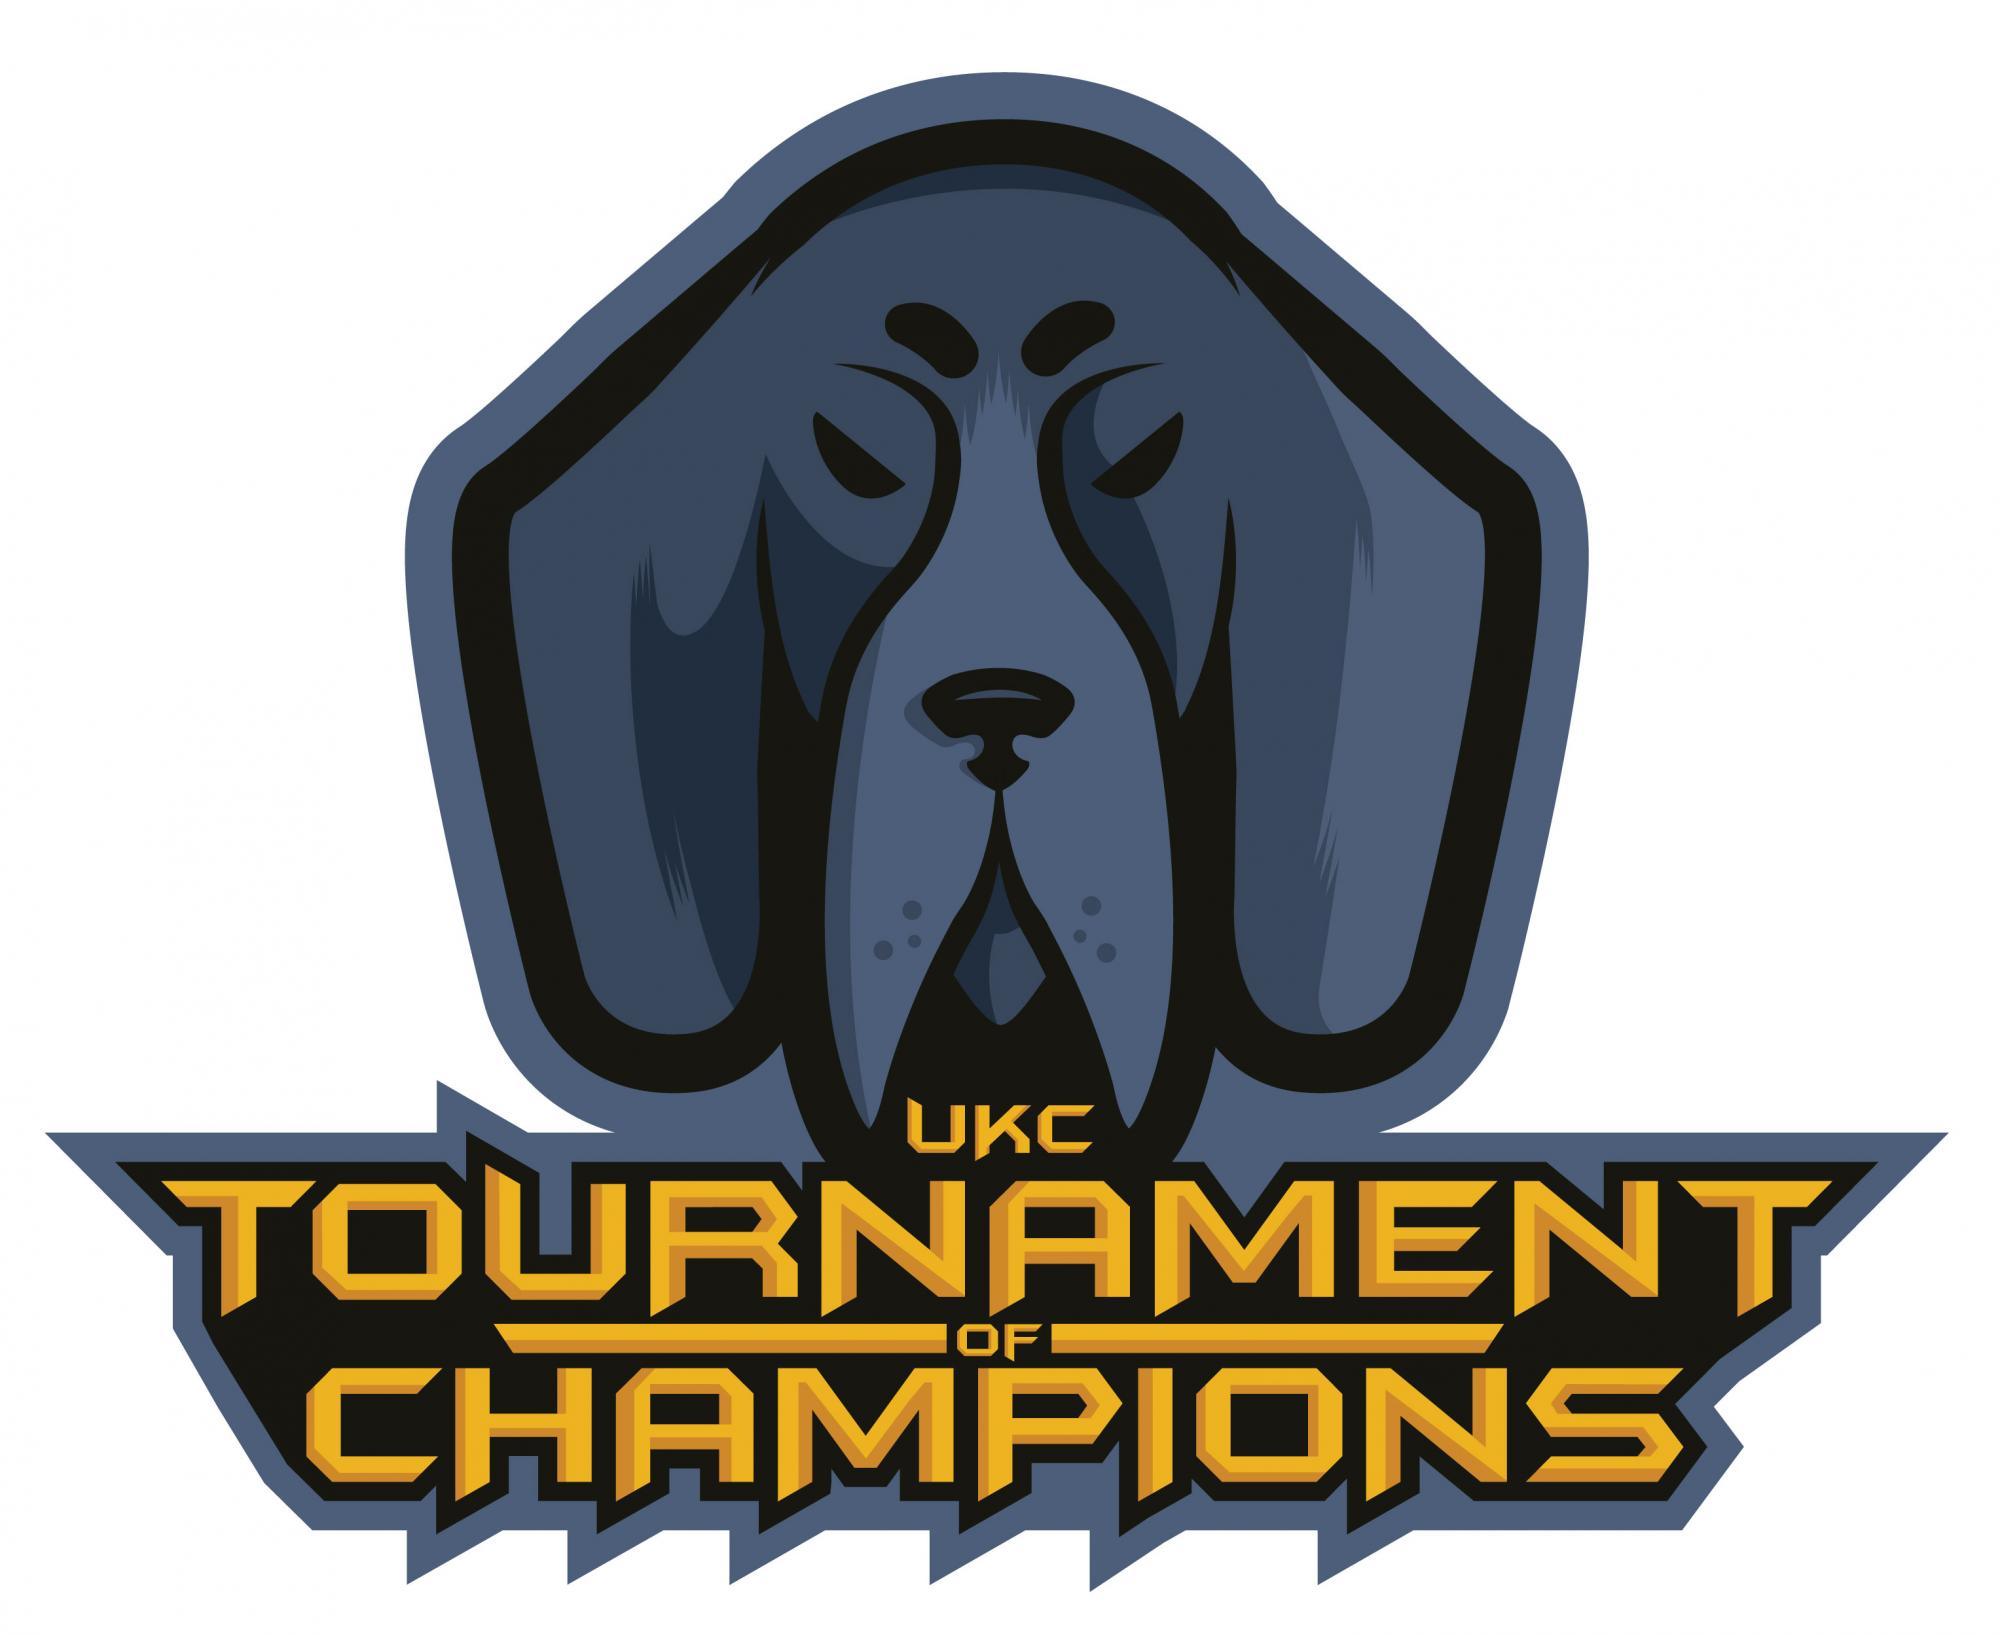 UKC Tournament of Champions logo